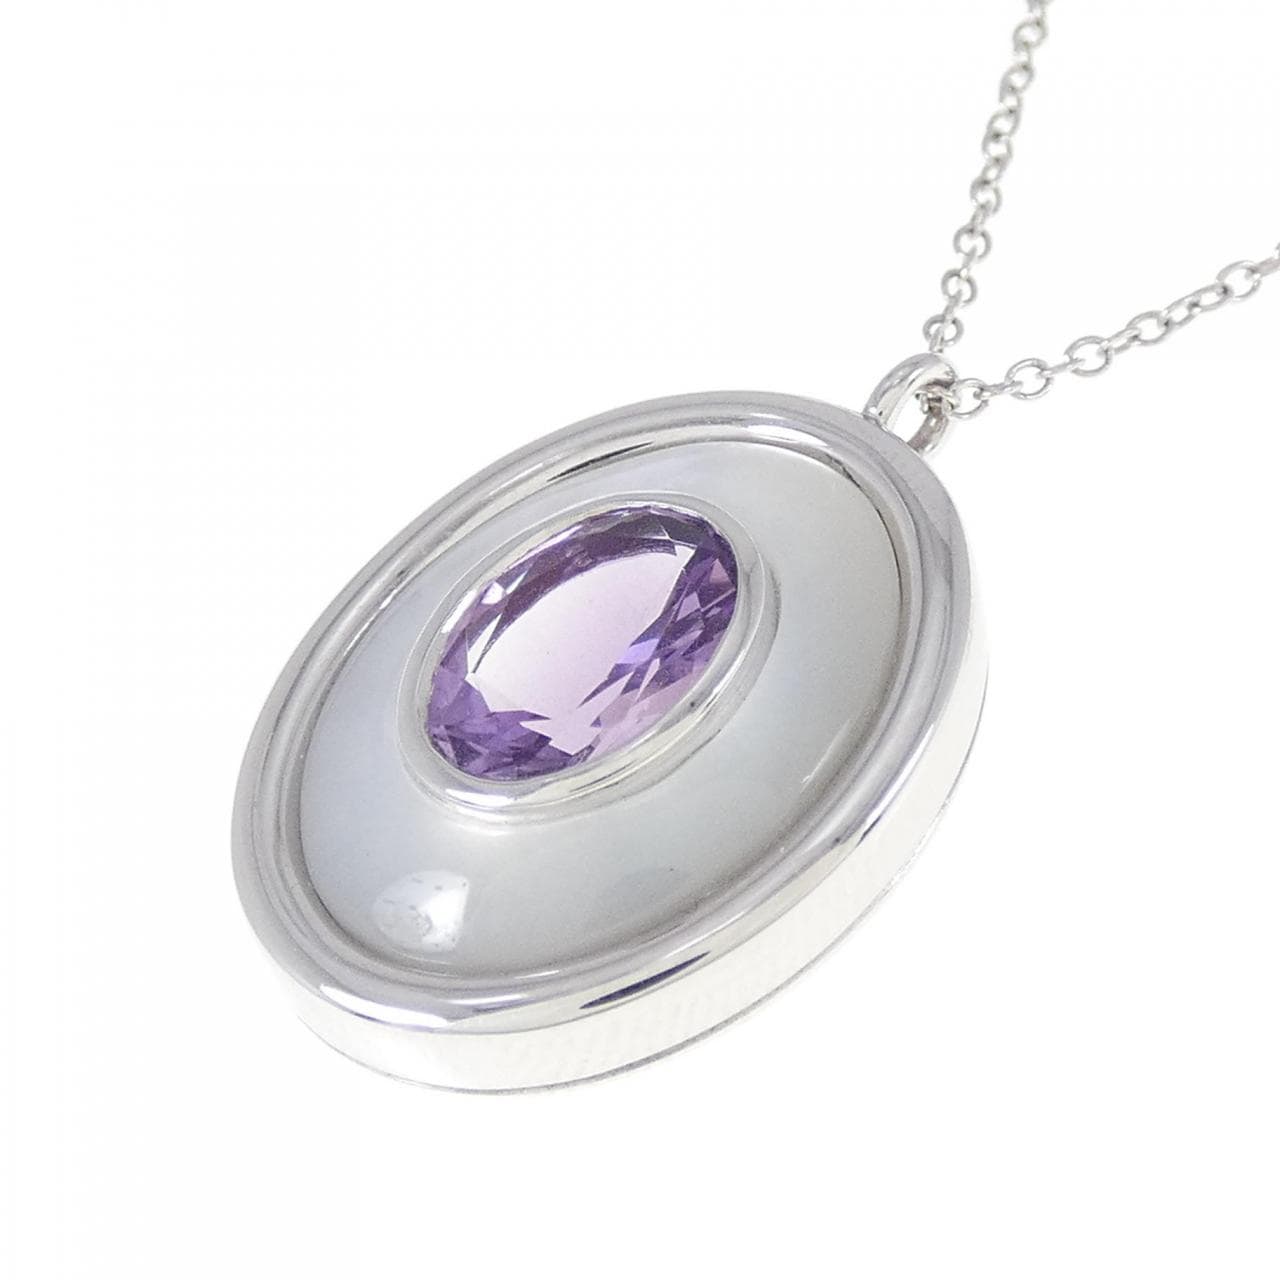 MAUBOUSSIN紫水晶项链